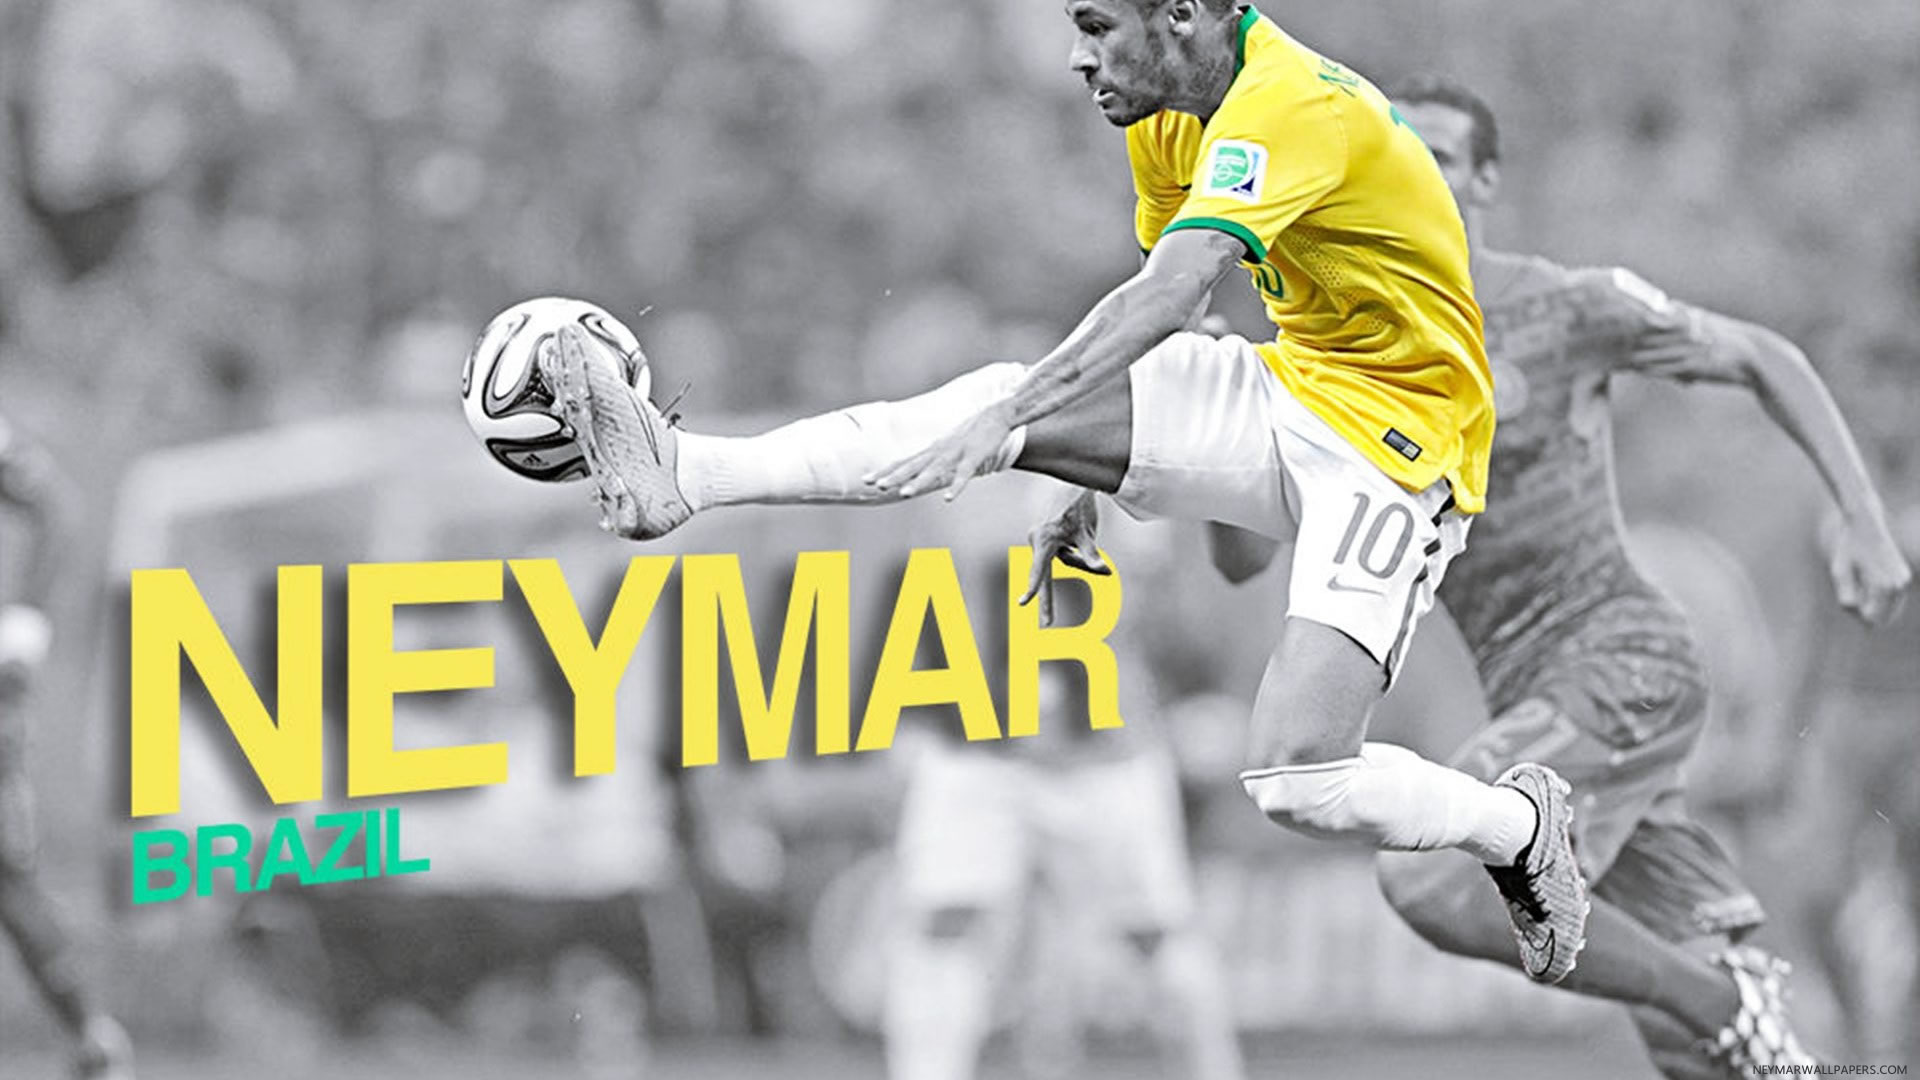 Neymar strike wallpaper